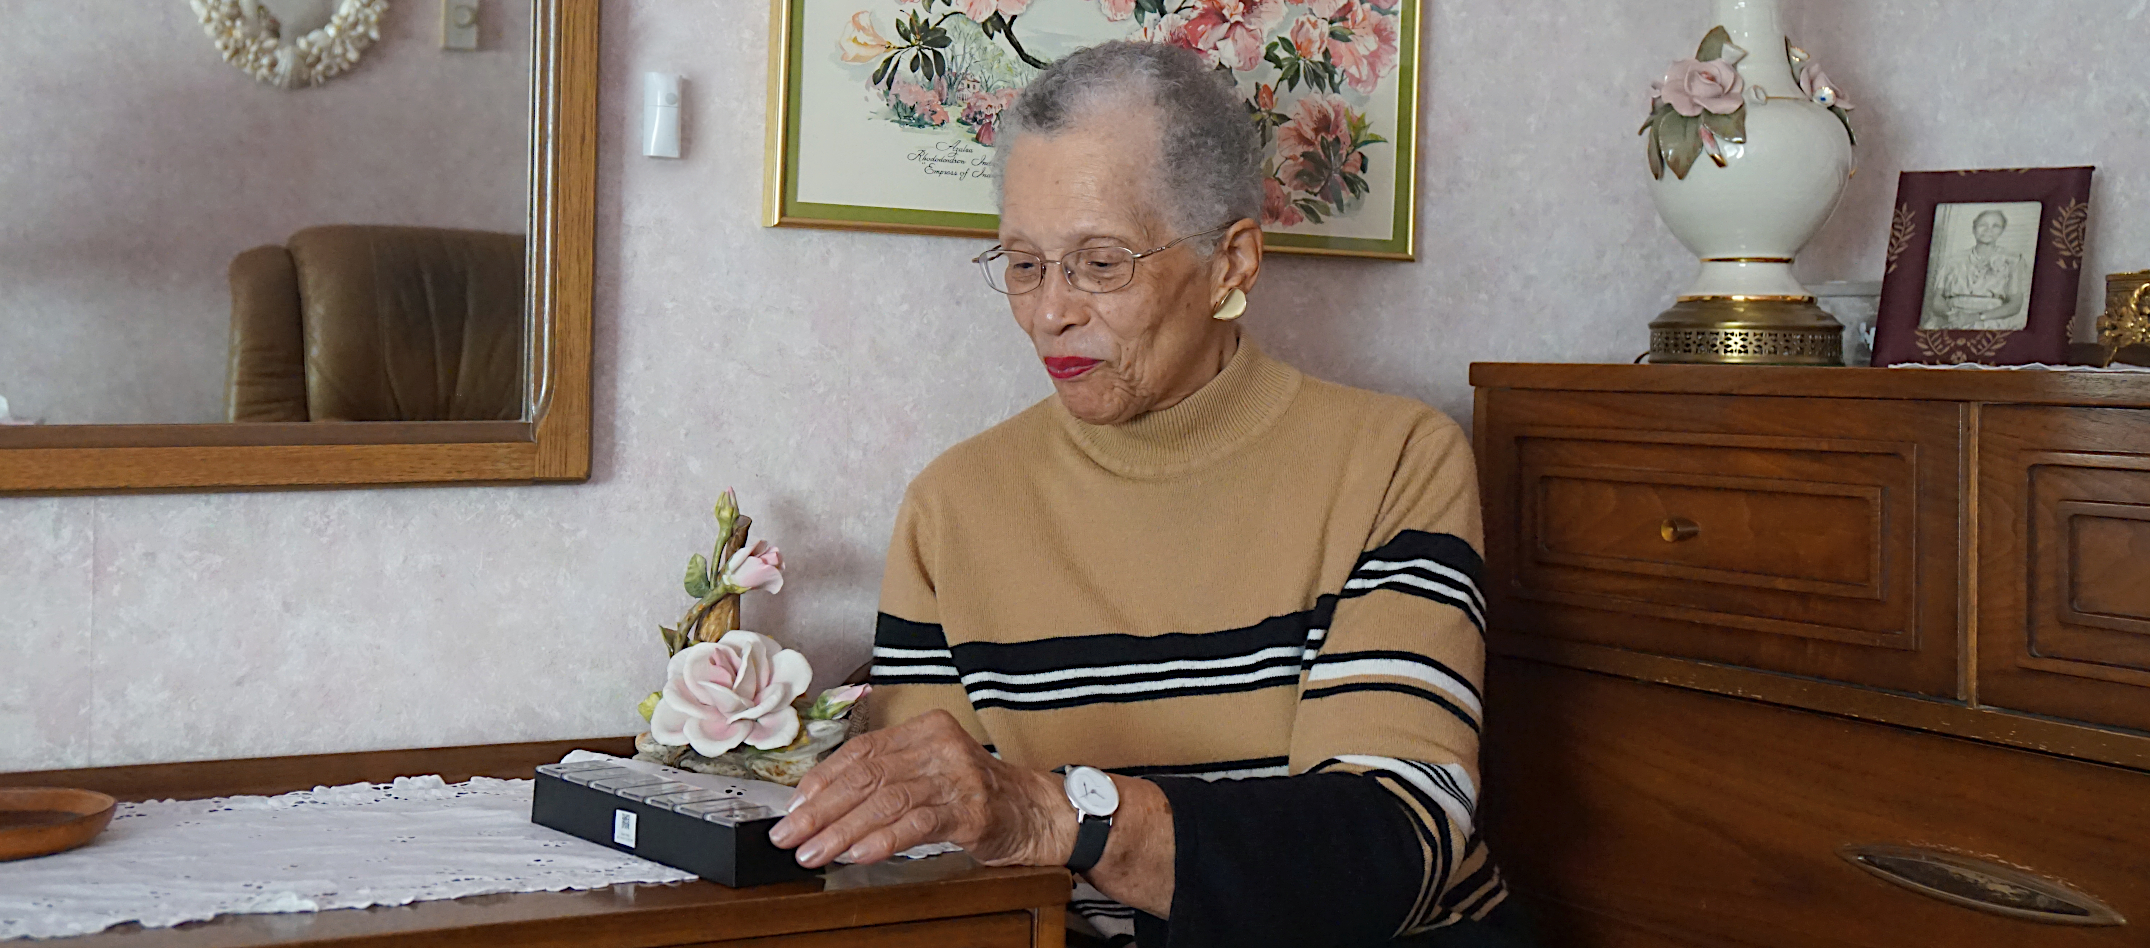 Older woman uses digital pillbox while sitting at desk 